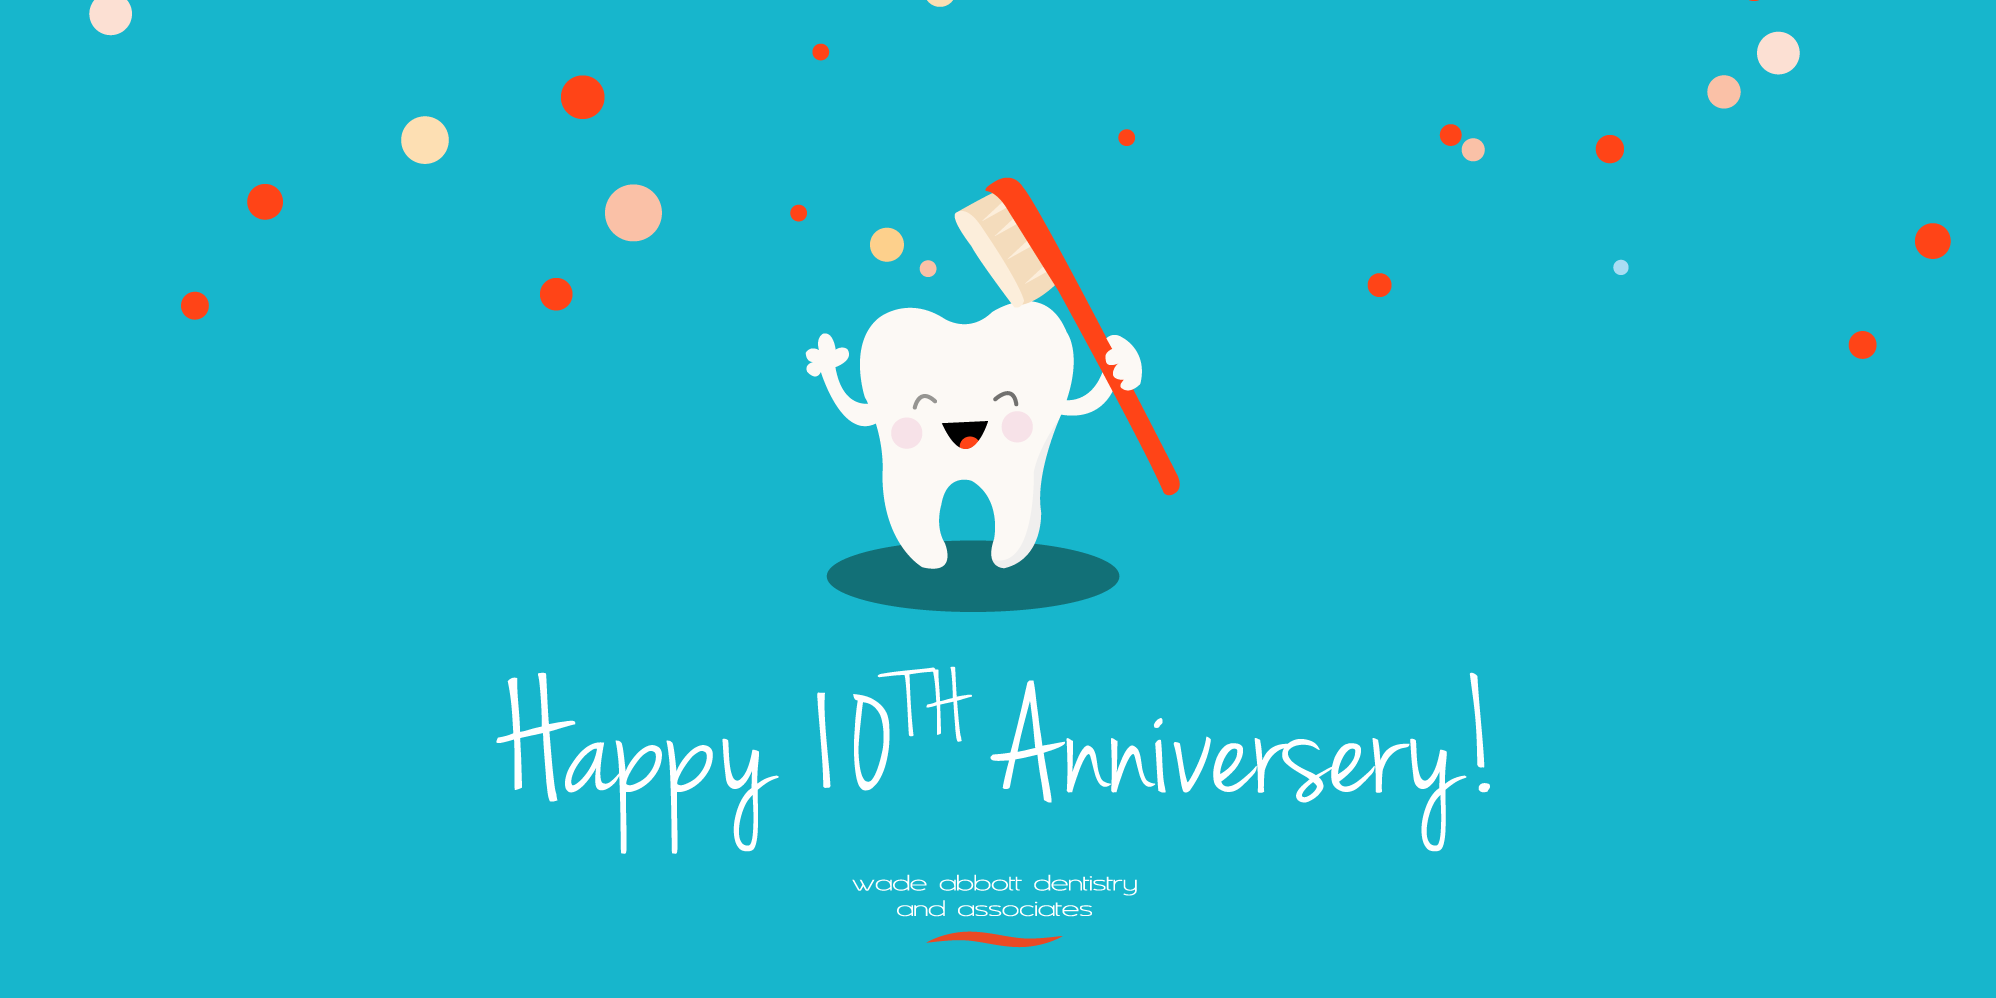 Wade Abbott Dentistry has hit a milestone! 1️⃣0️⃣